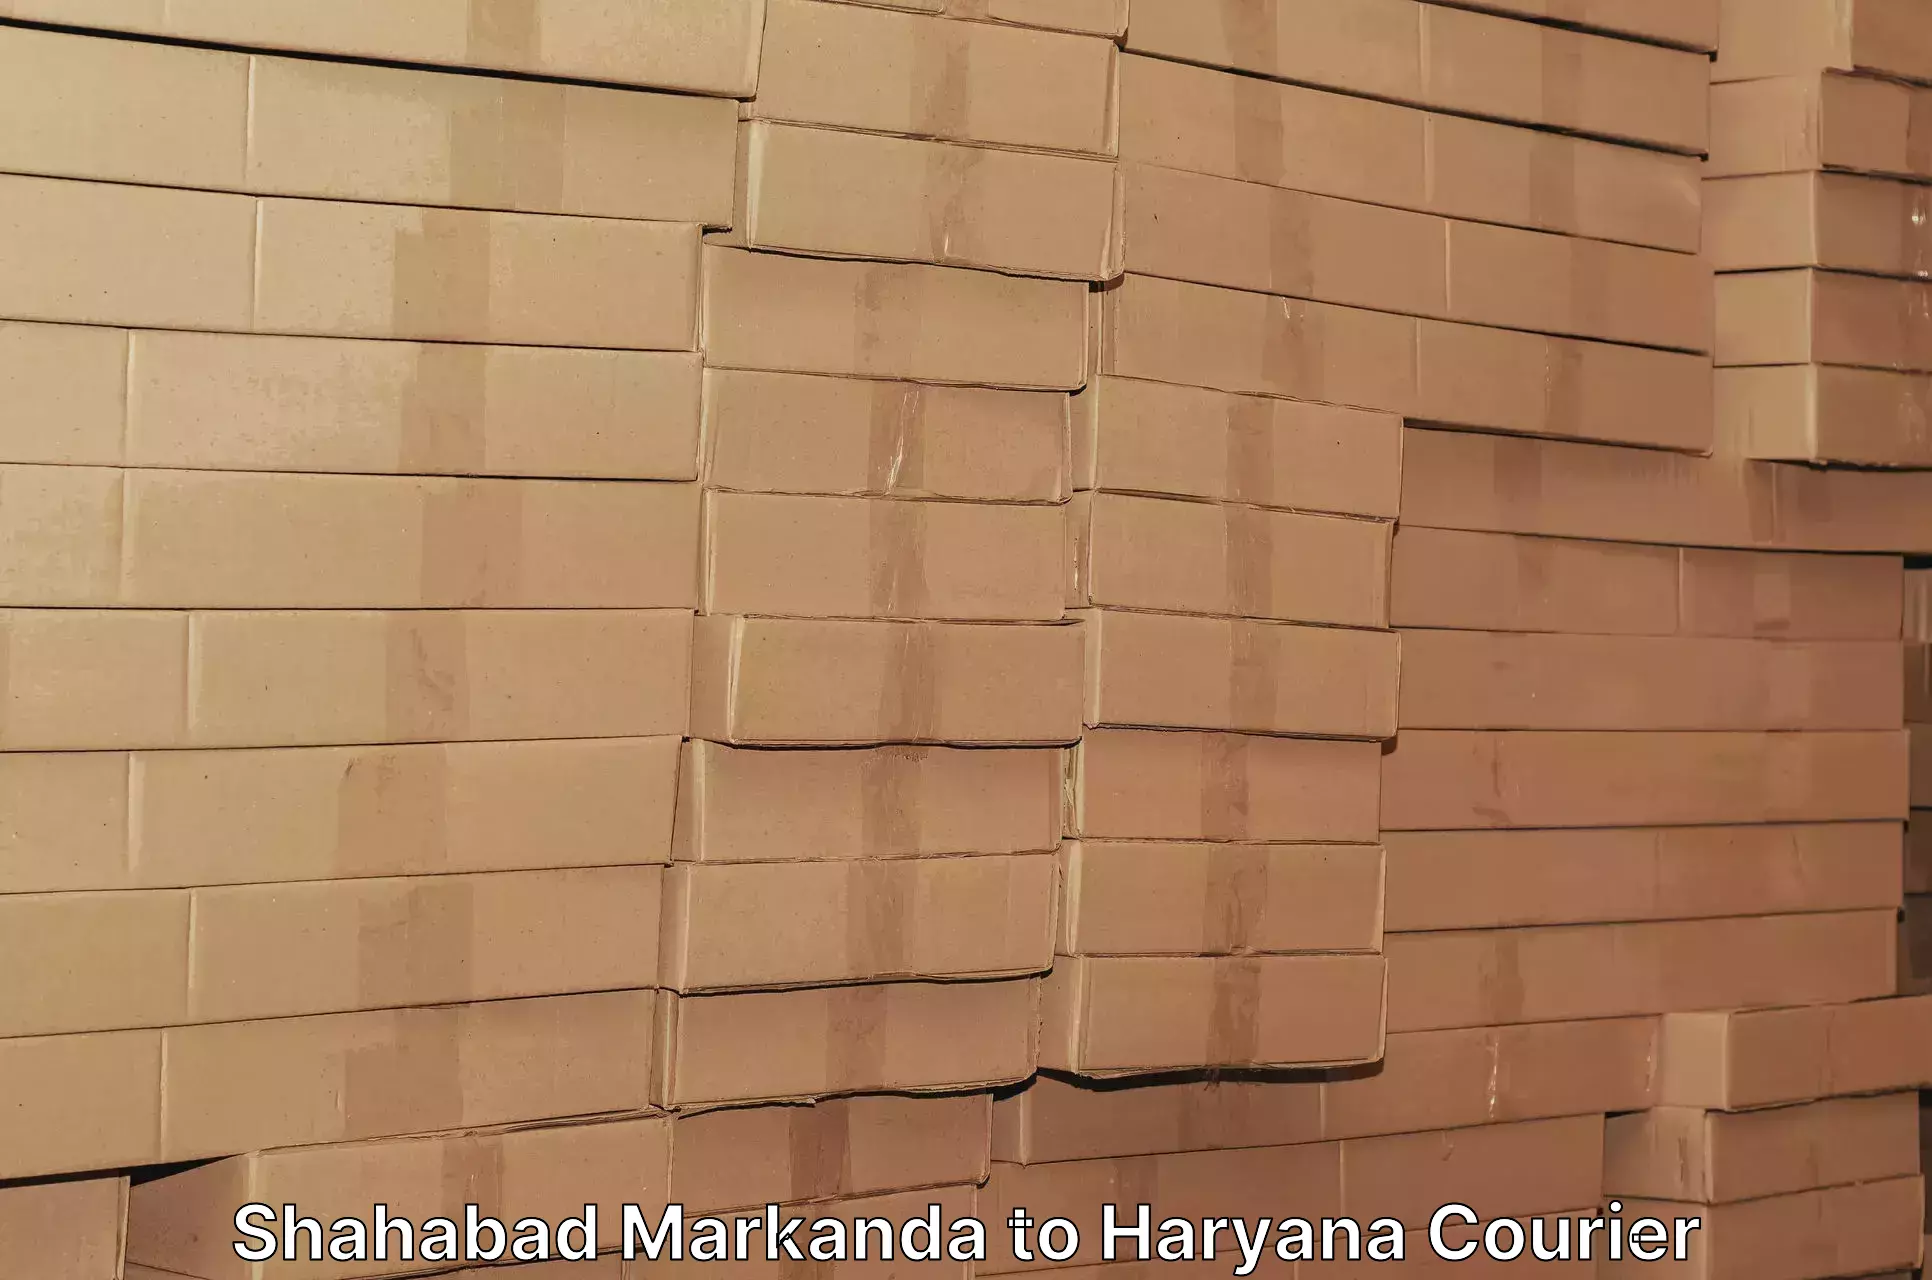 State-of-the-art courier technology Shahabad Markanda to Haryana